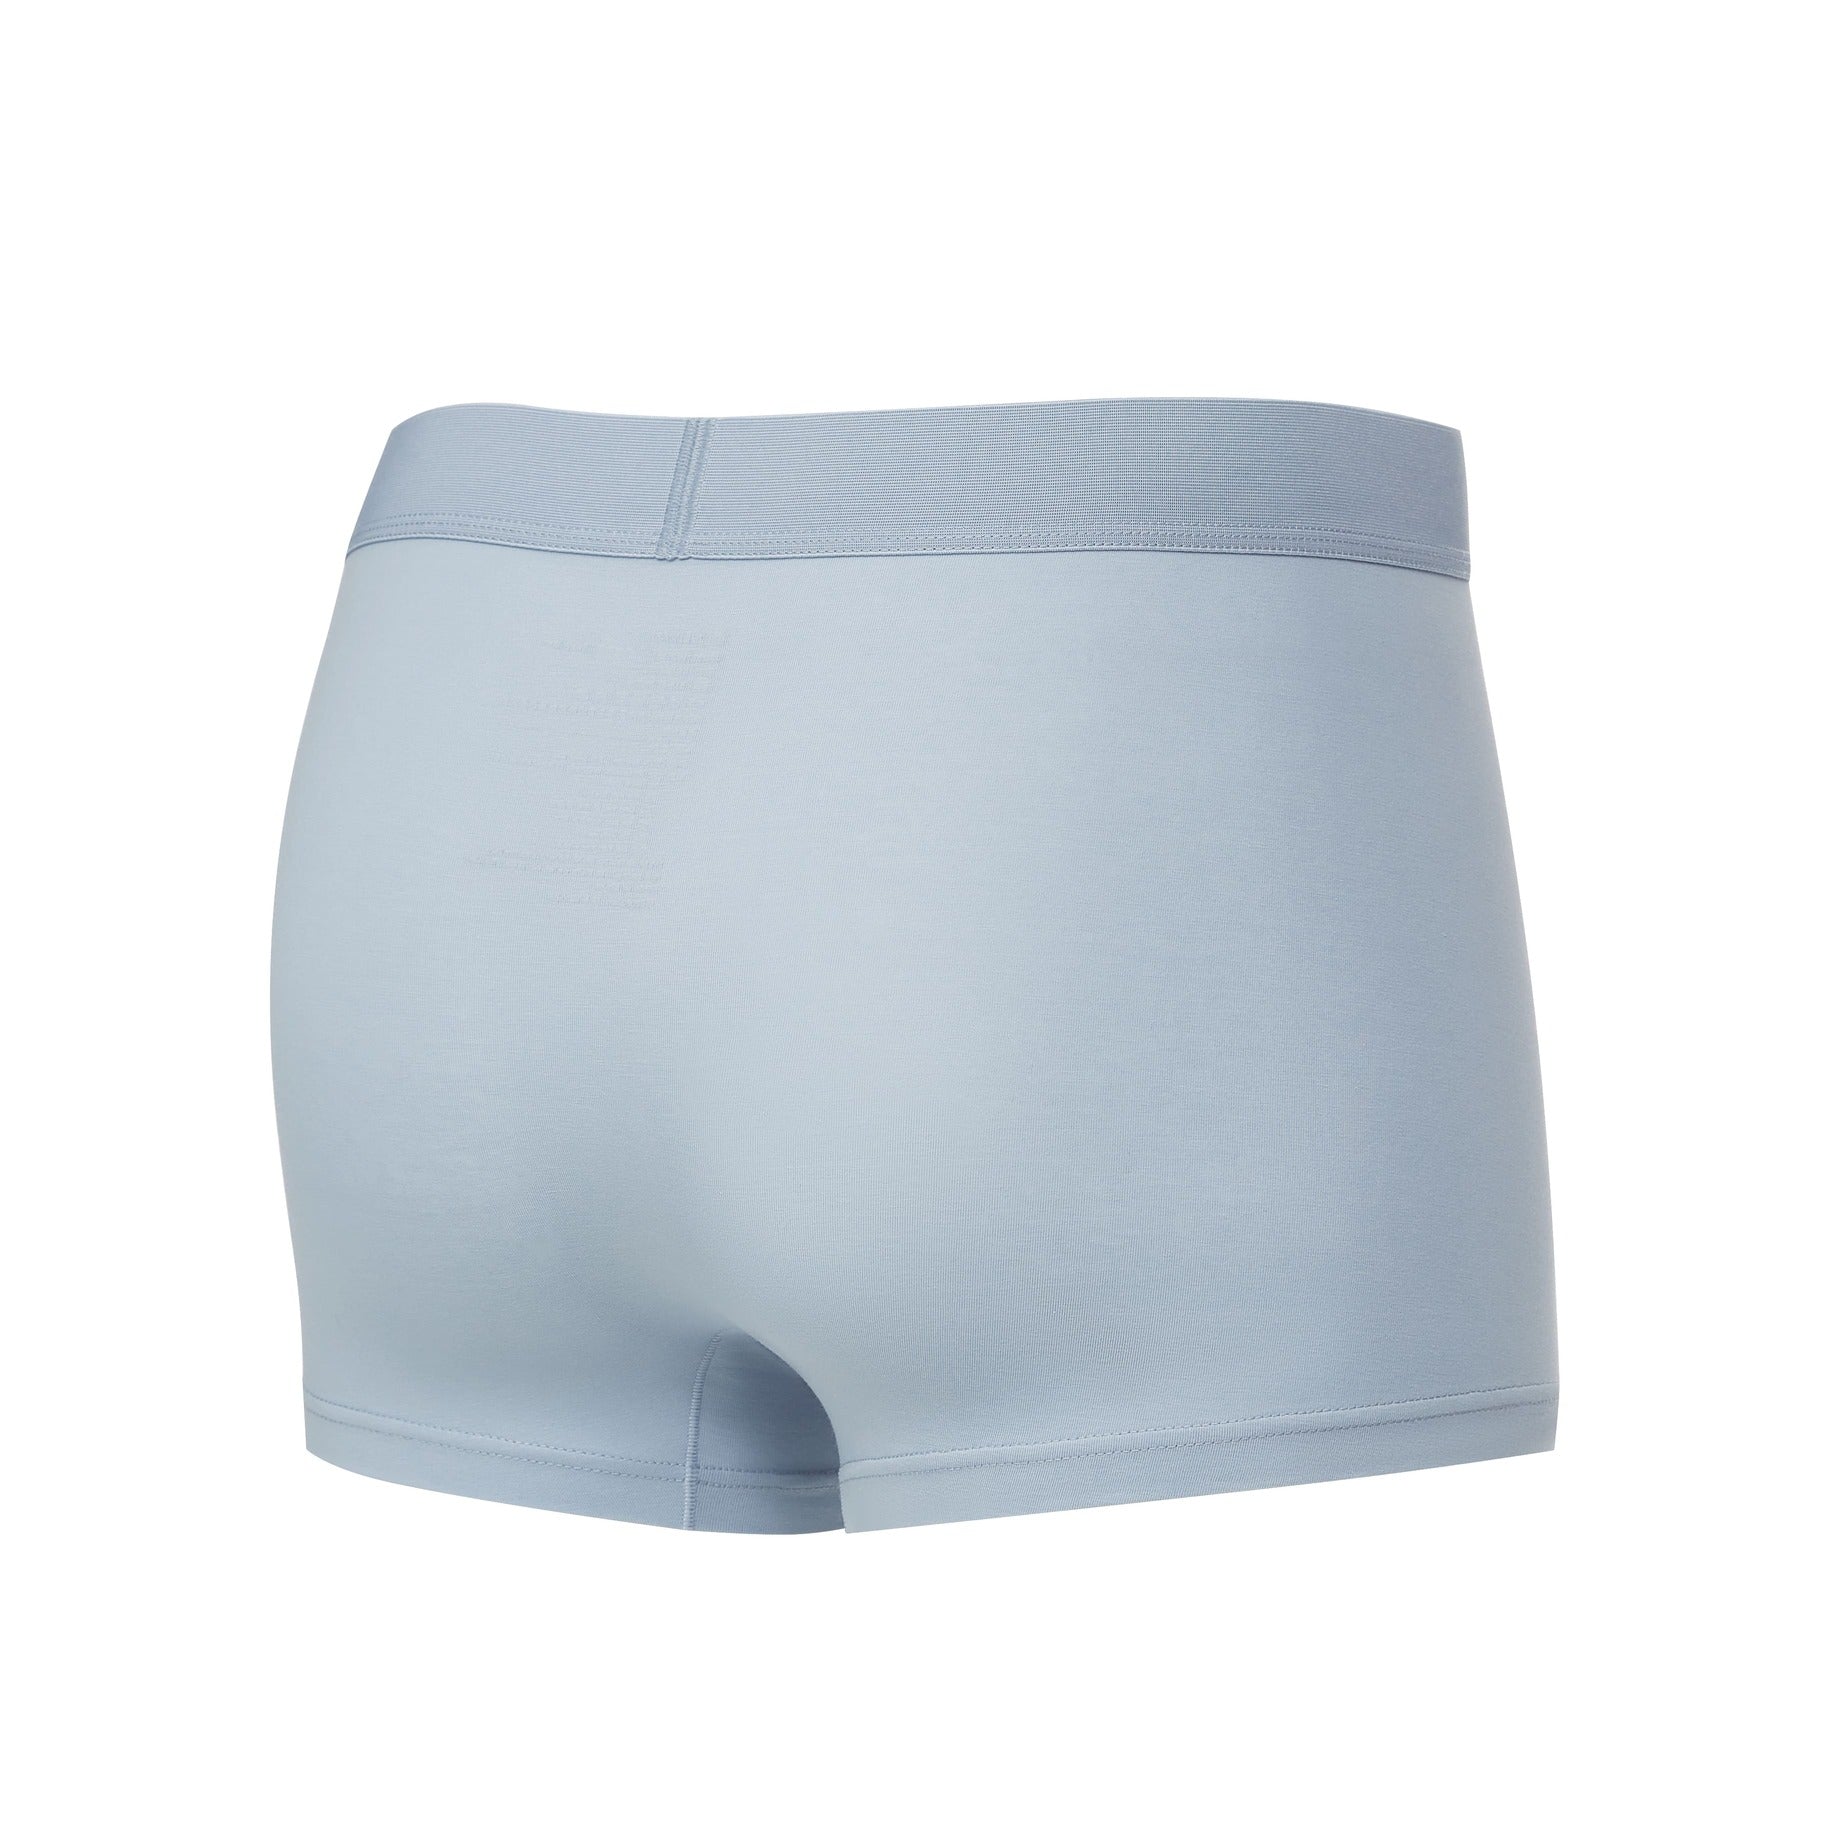 Disposable Cotton Men's Briefs 5 Pack│Travel Portable Underwear│Cotton  Underwea - Shop bananatrip-hk Men's Underwear - Pinkoi